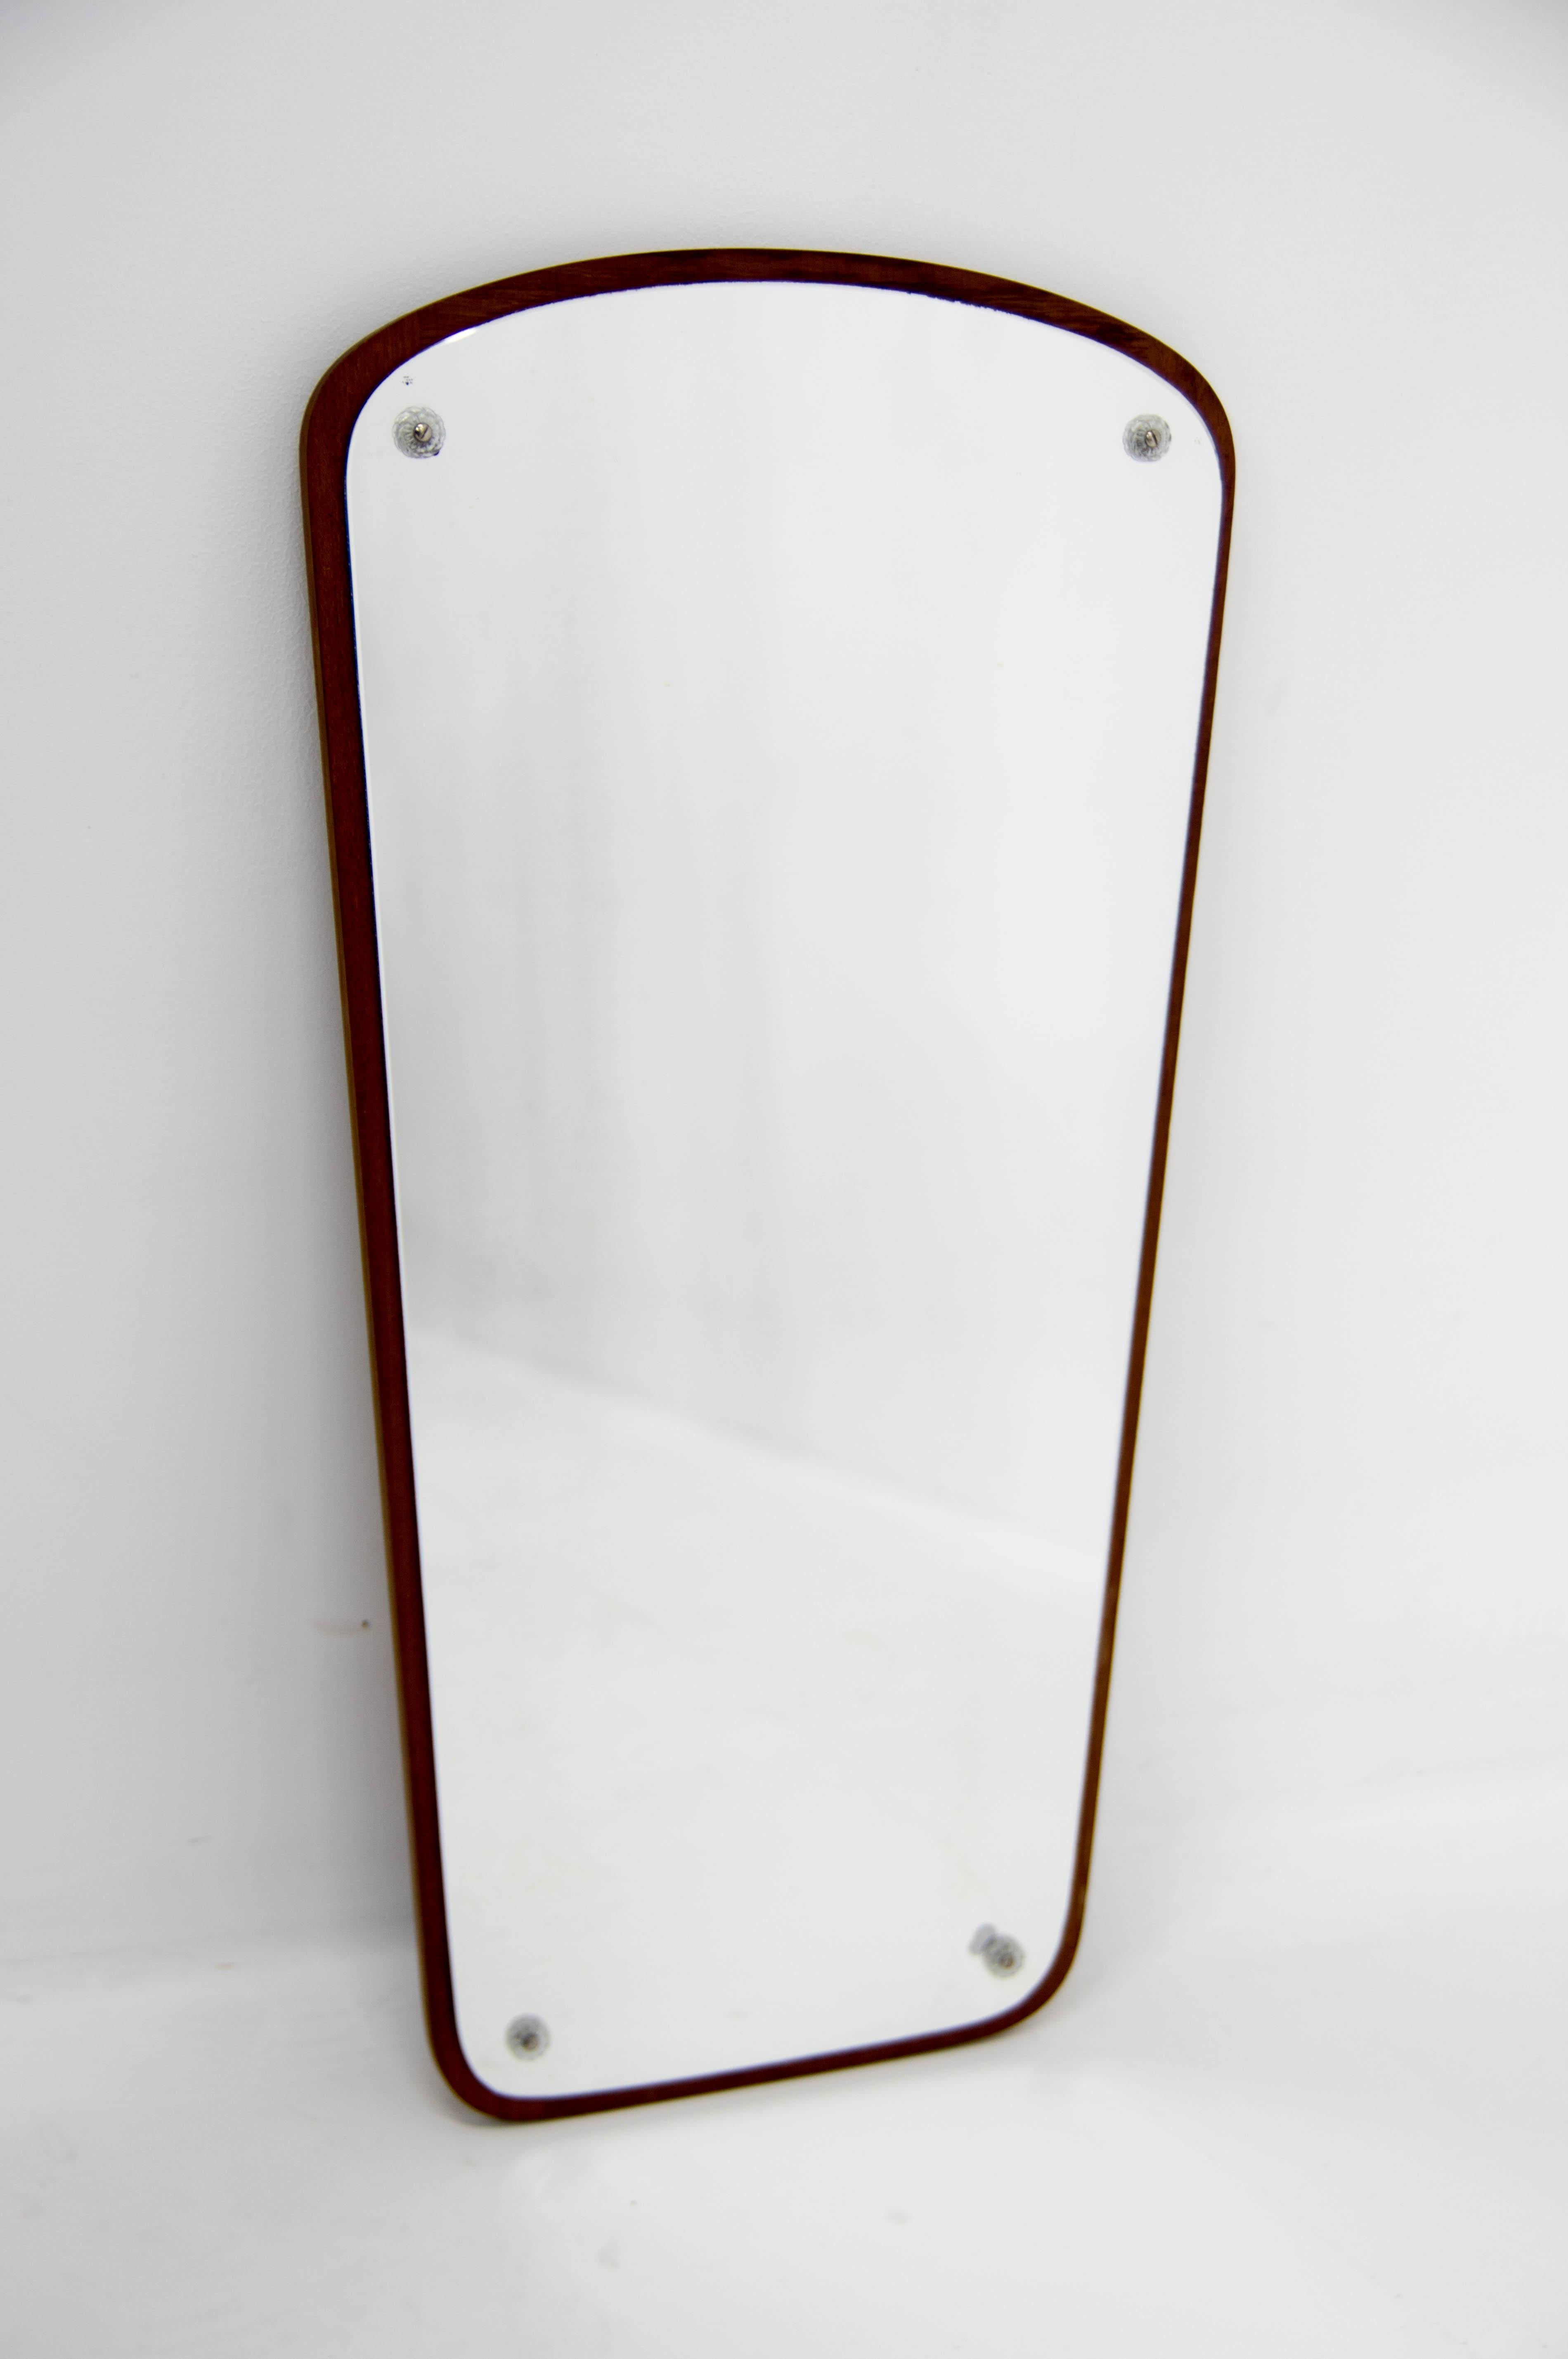 Scandinavian Modern Wall Mirror in Teak Frame, Denmark, 1960s For Sale